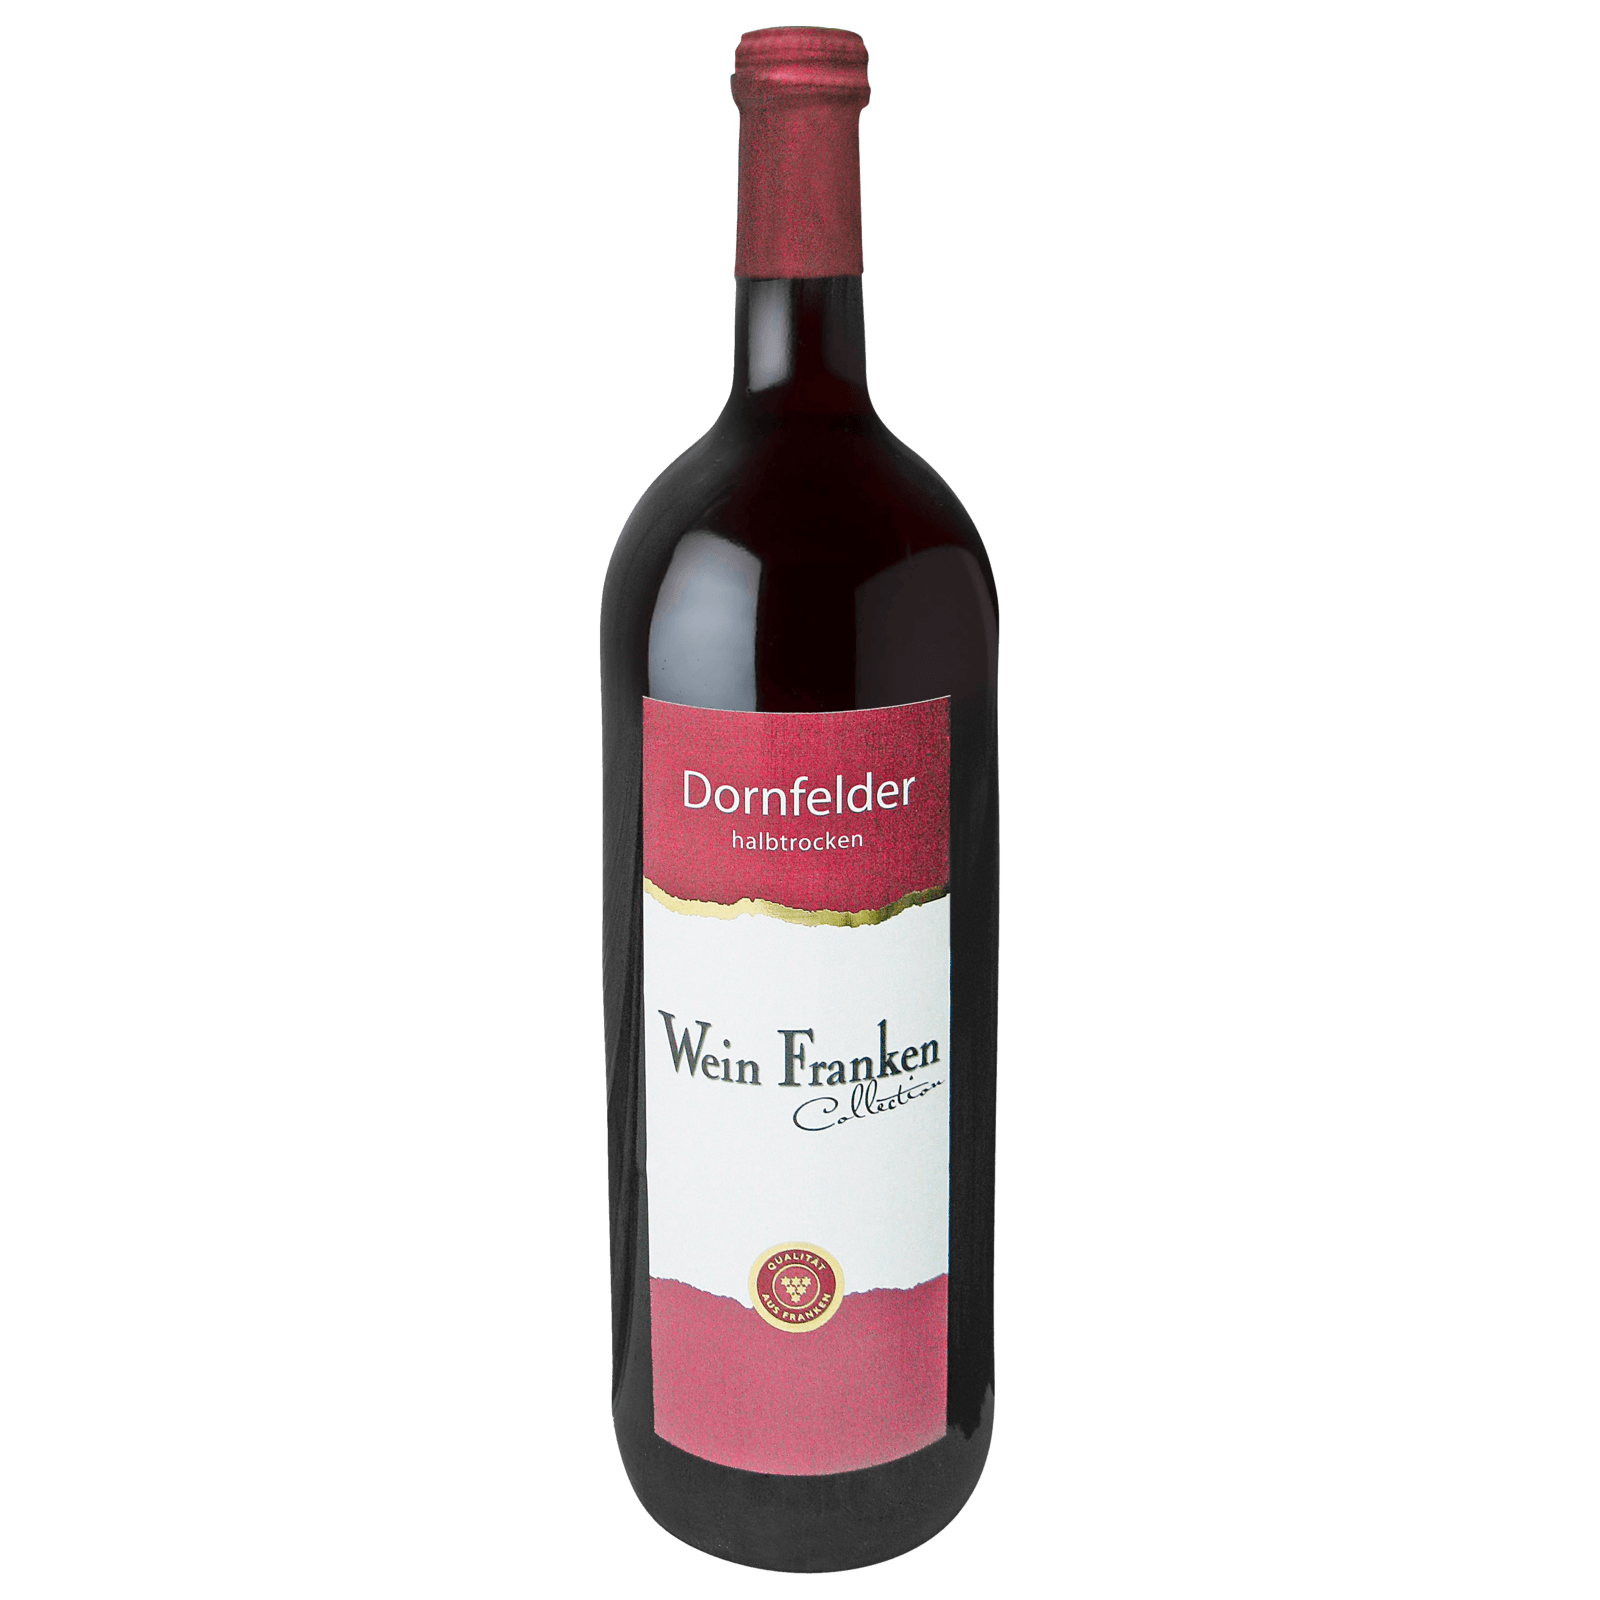 Wein Franken Rotwein Dornfelder QbA 1l online bestellen! REWE halbtrocken bei